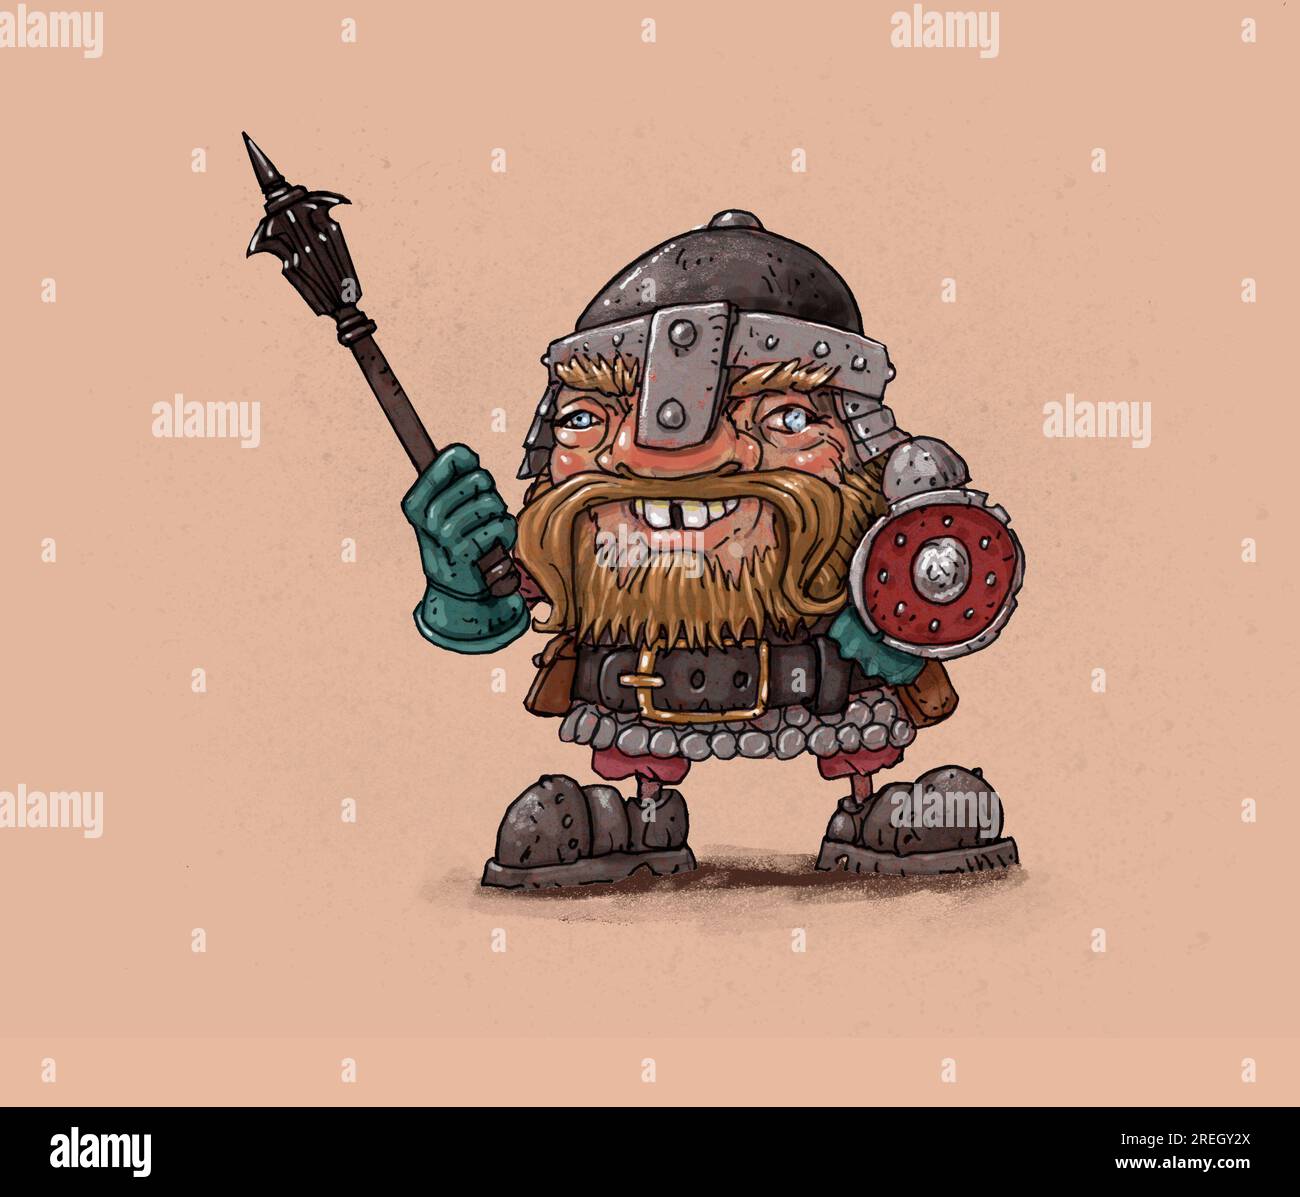 Art fantasy D&D dwarf wearing armour holding sword & halberd blond beard, genre illustration, gaming, RPGs, concept small but fierce, ready for battle Stock Photo